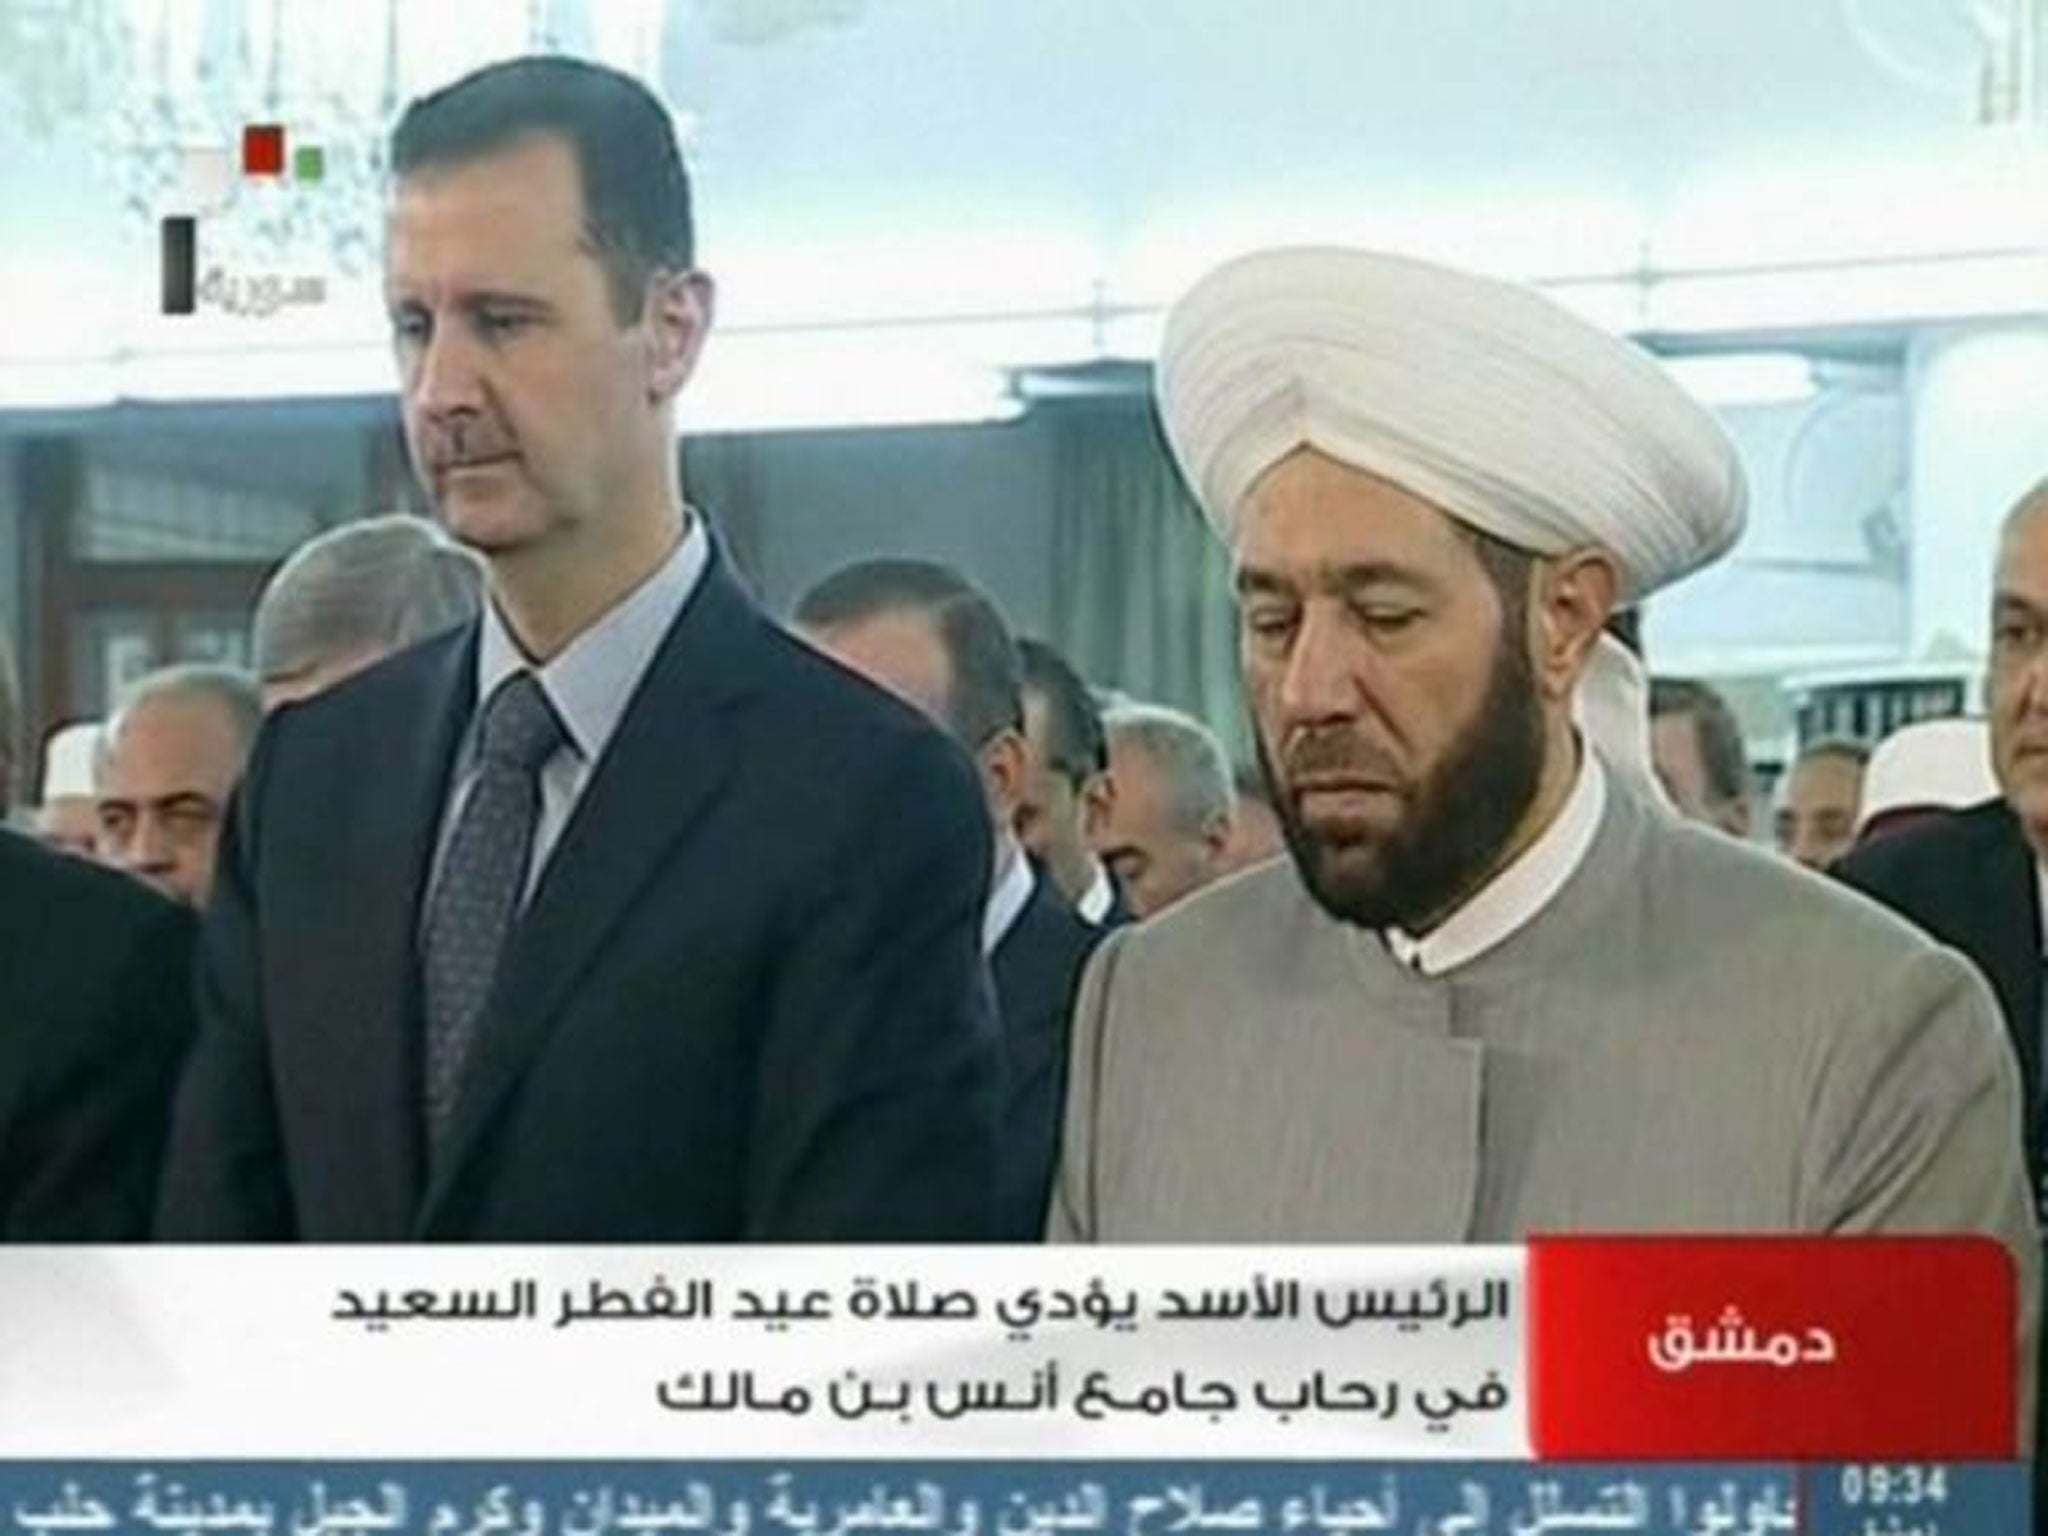 Syrian authorities released footage of President Assad attending morning prayer, seemingly unhurt